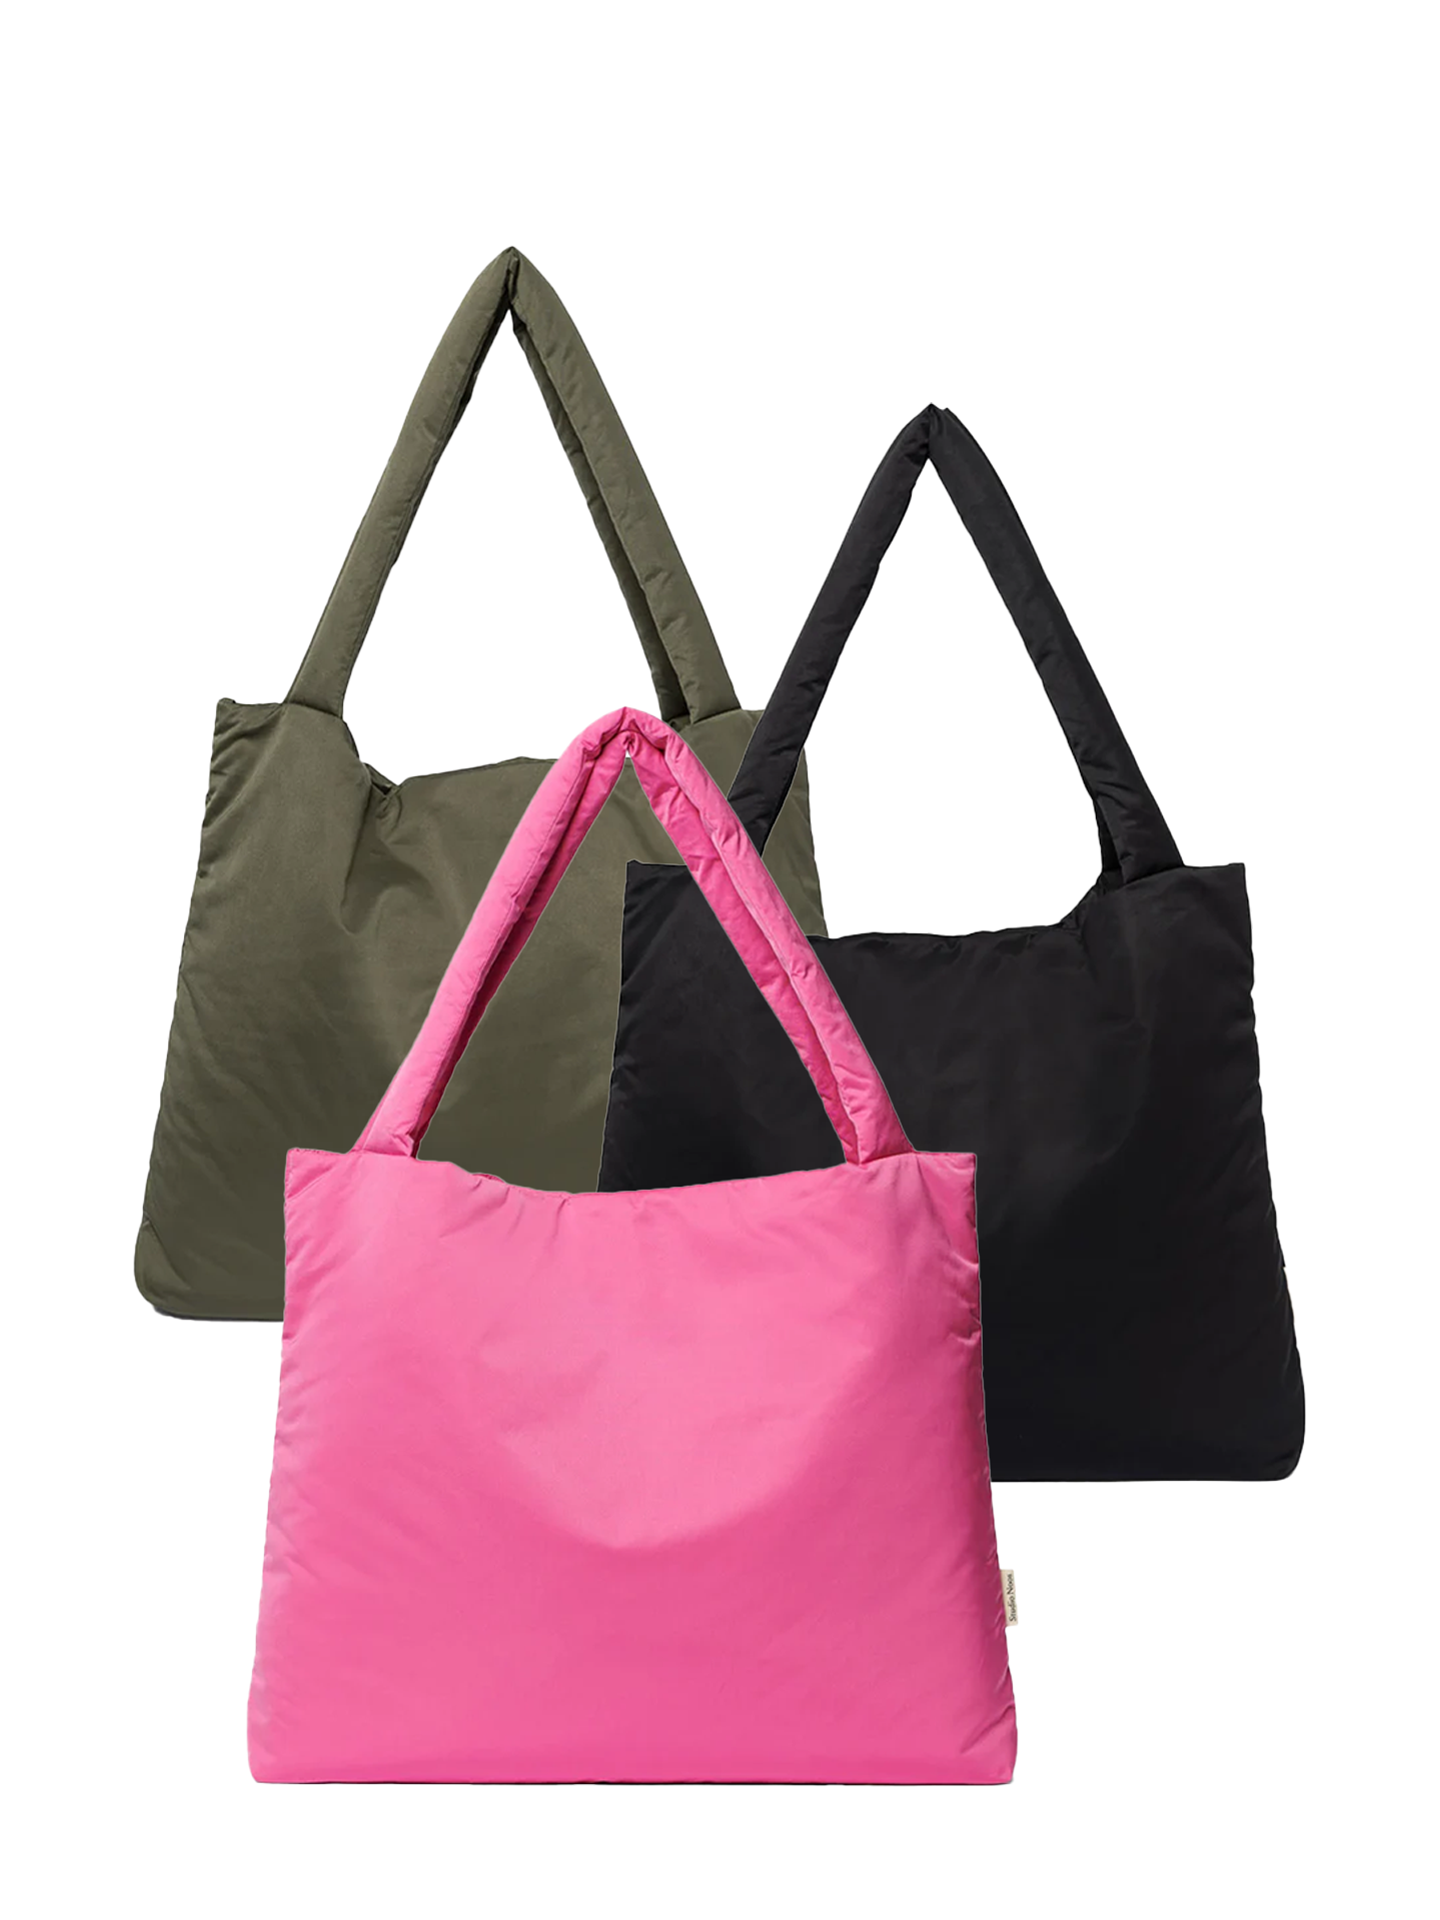 Puffy Mom bag, Black, Pink or Green